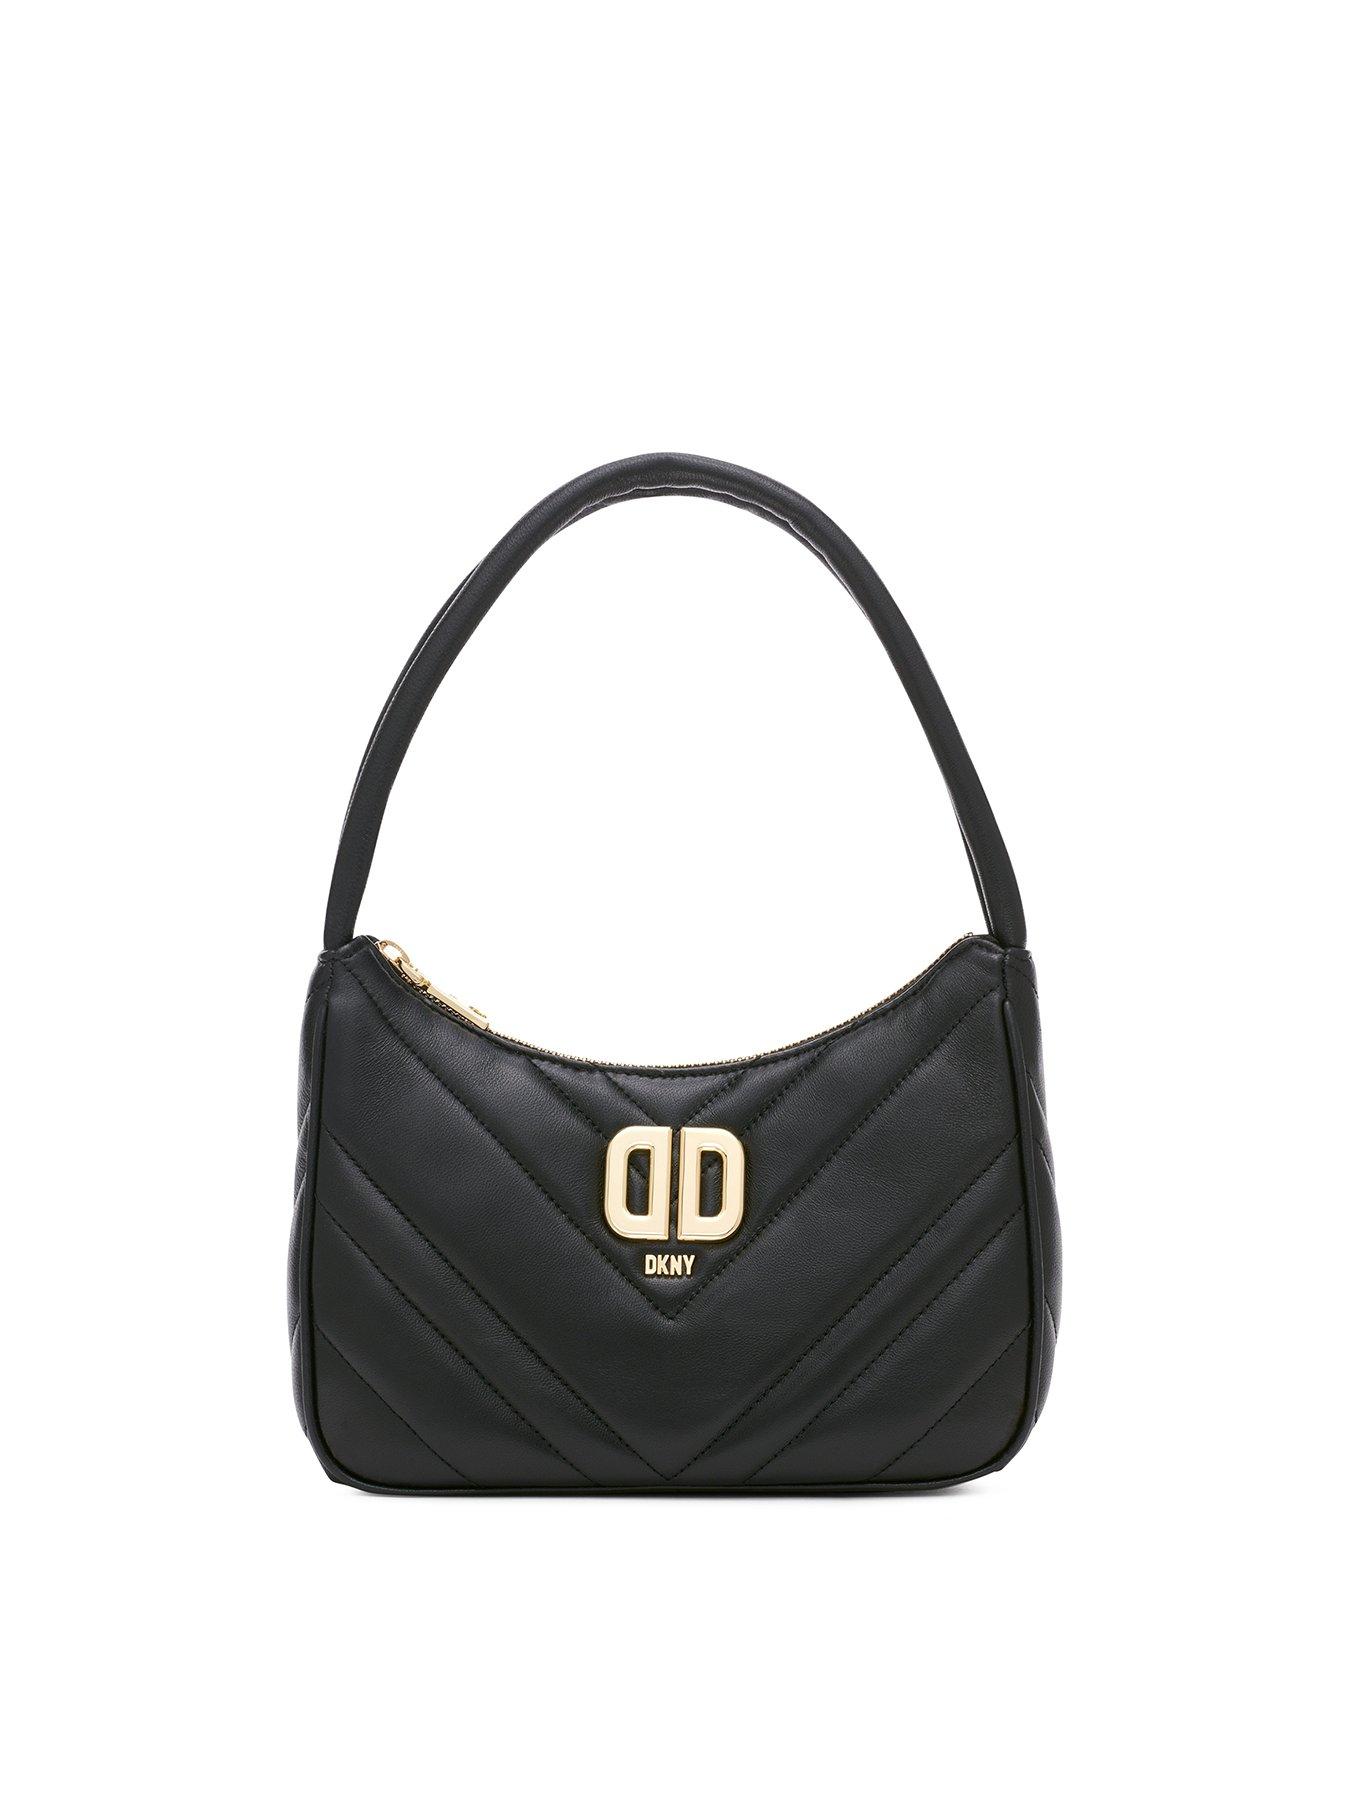 DKNY Delphine Crossbody Bag, Black